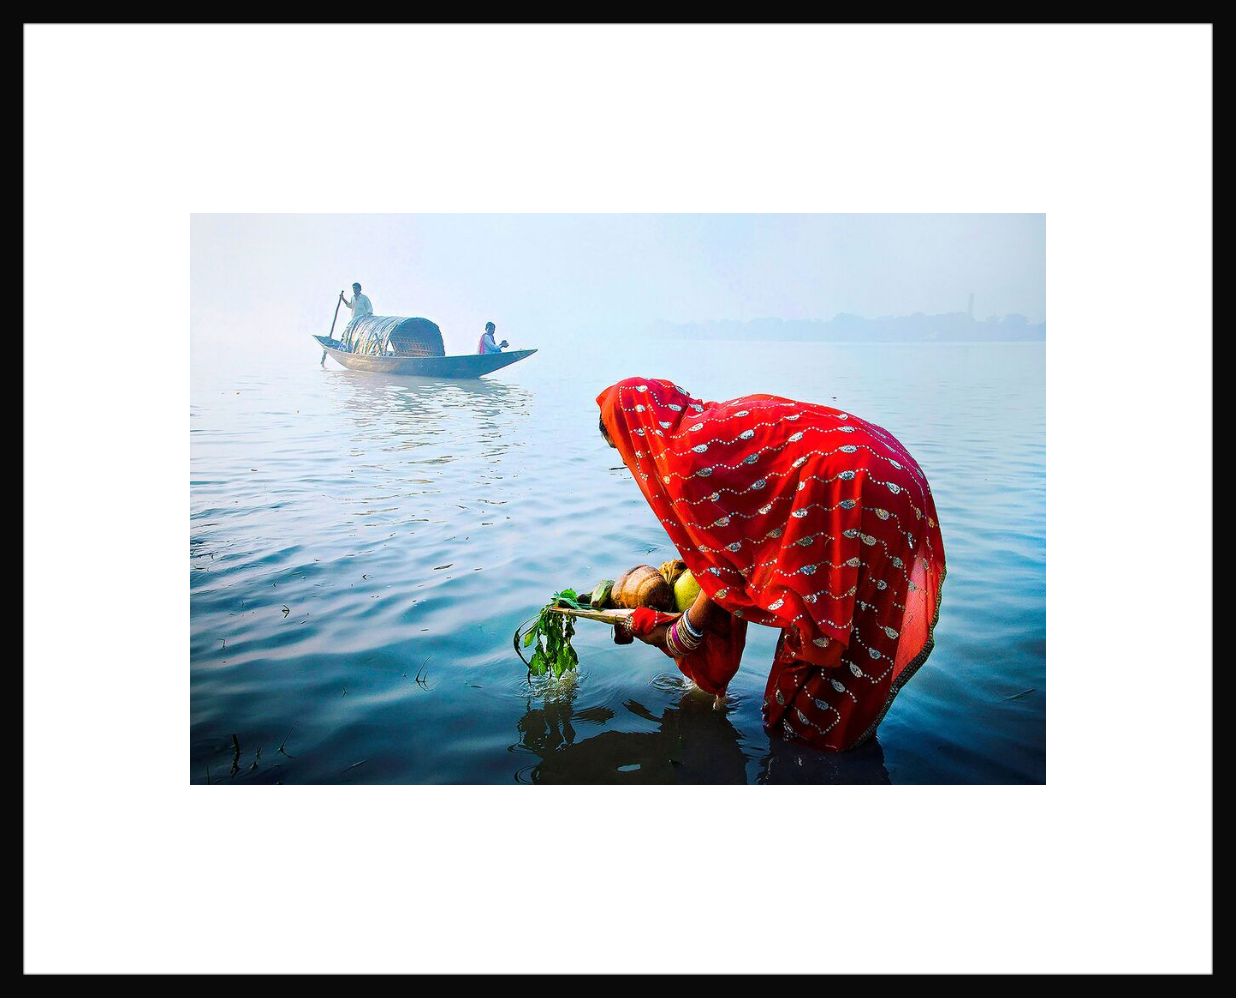 Fotografia Morning prayer - Pranab Basak - Pittura di immagini